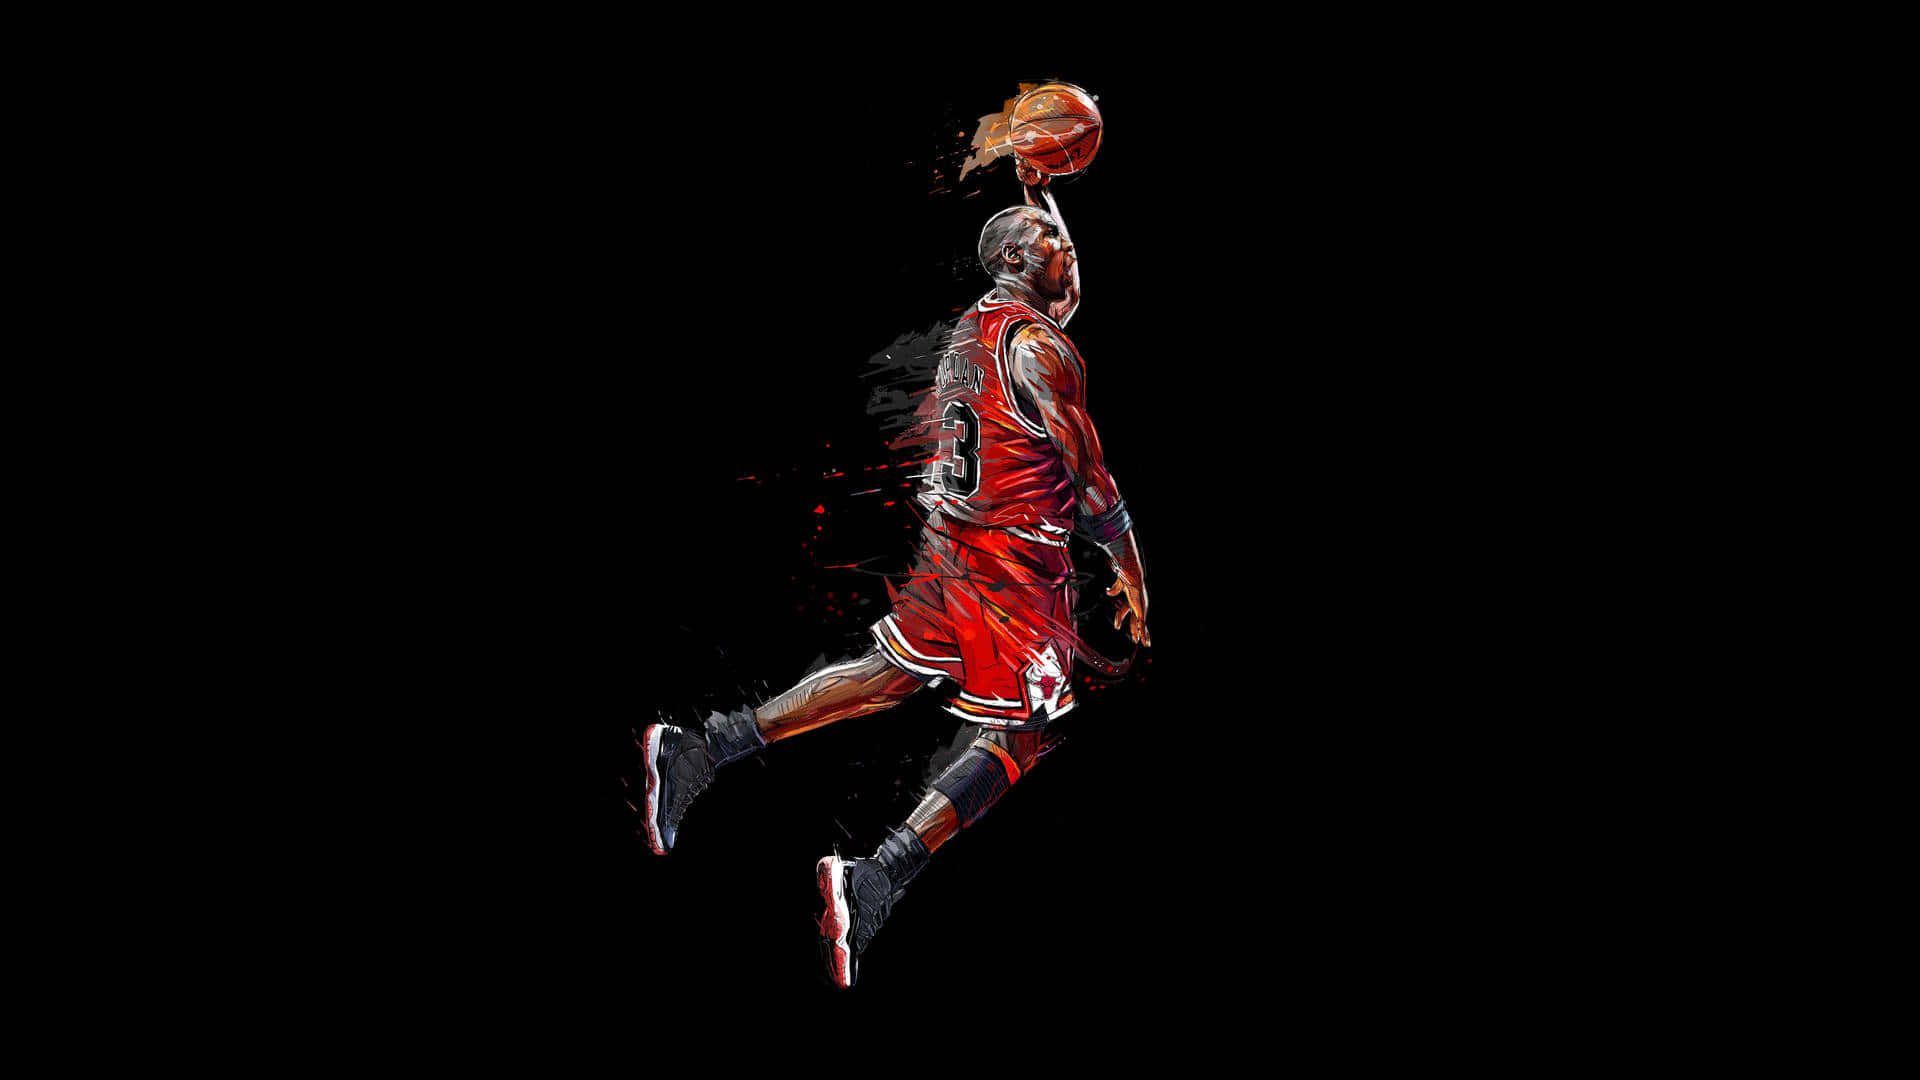 Dynamic Basketball Dunk Artwork Wallpaper